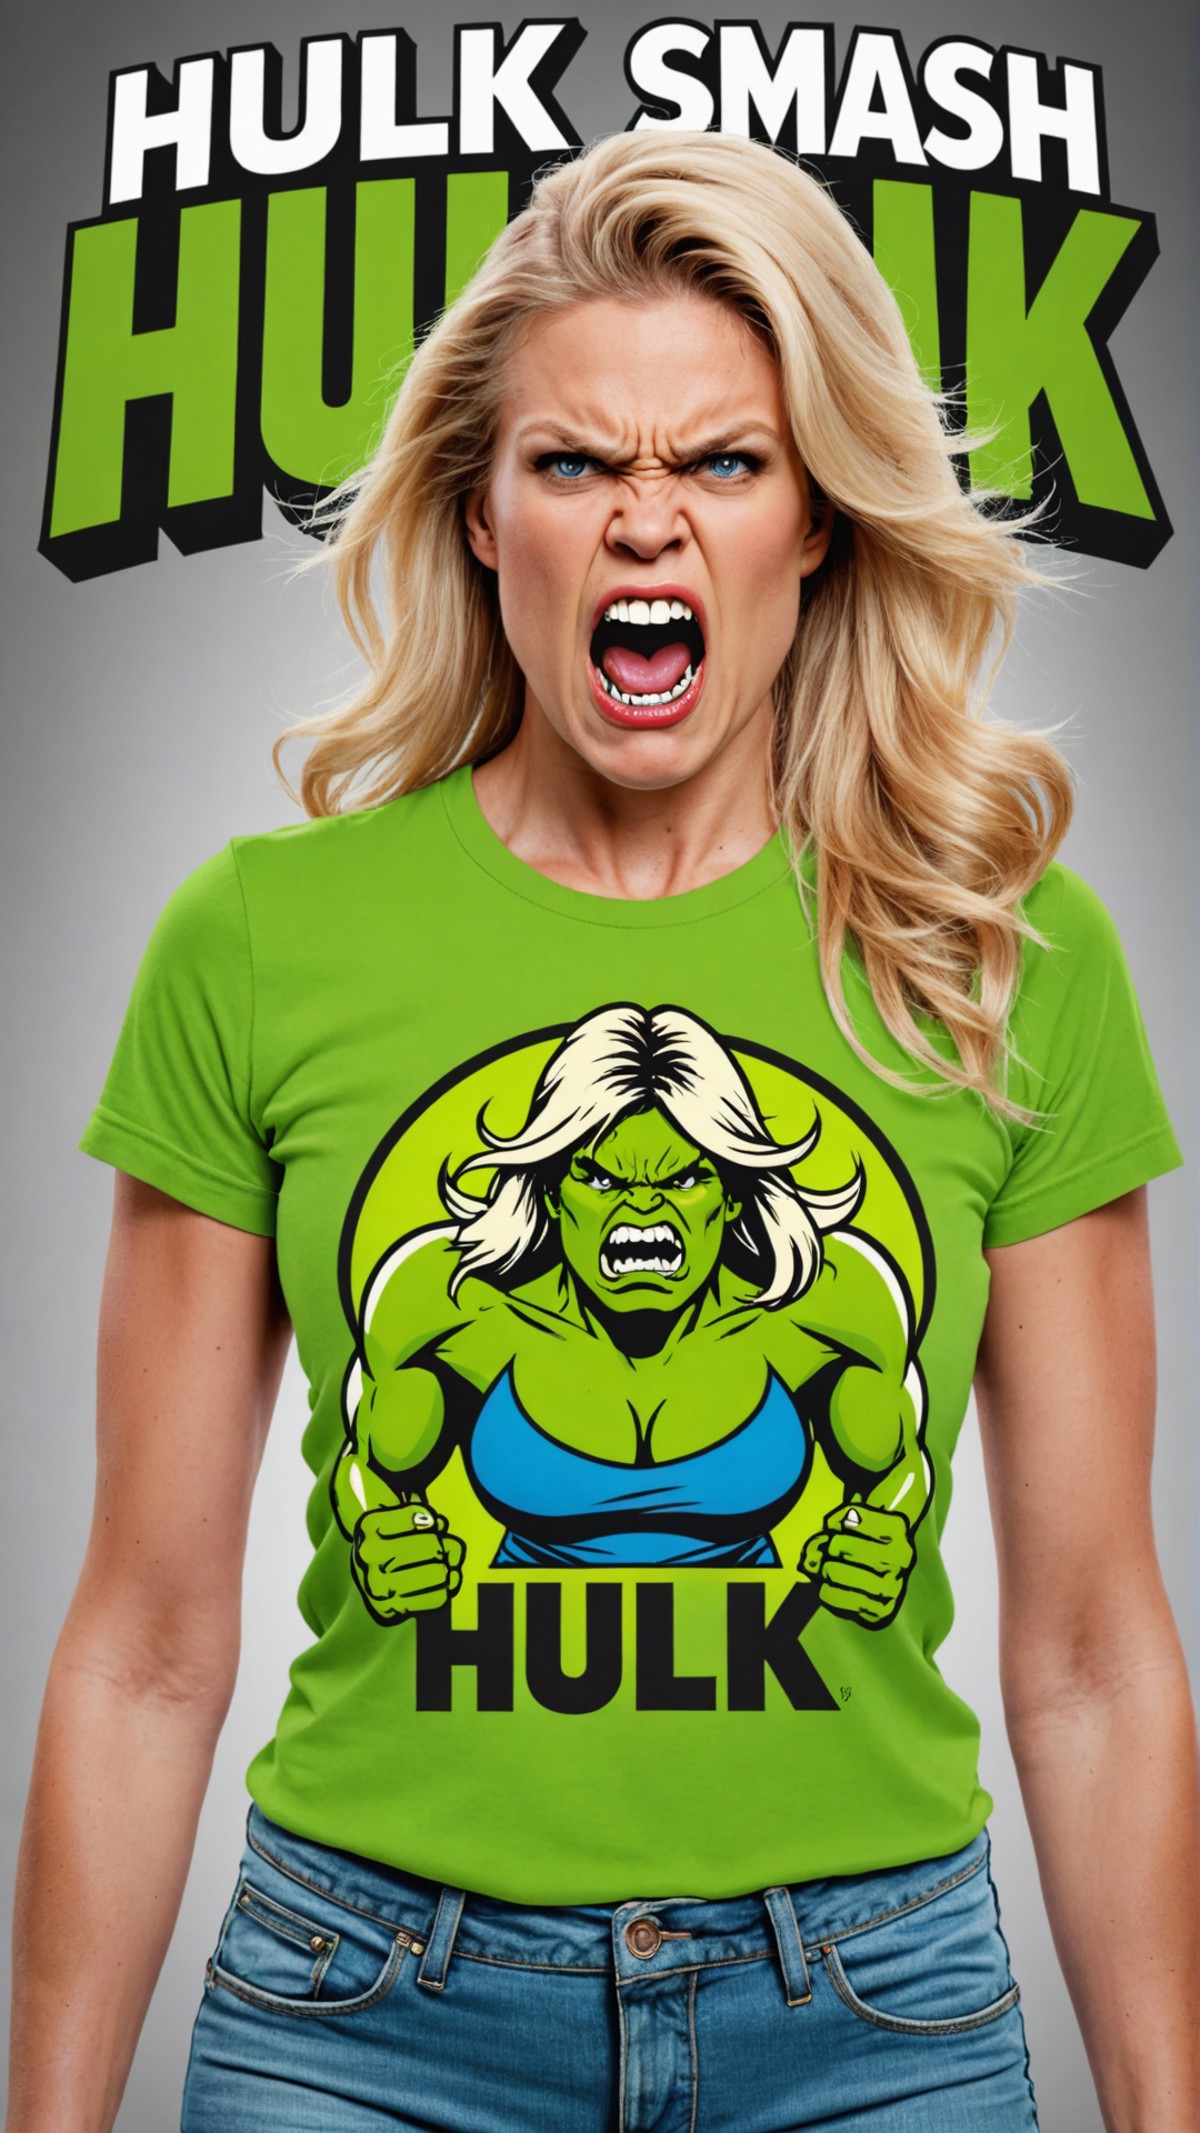 photograph of angry beautiful SUPERMODEL woman, "HULK SMASH MANIA" t-shirt logo, BLONDE hair, SEXY, turning into incredibl...